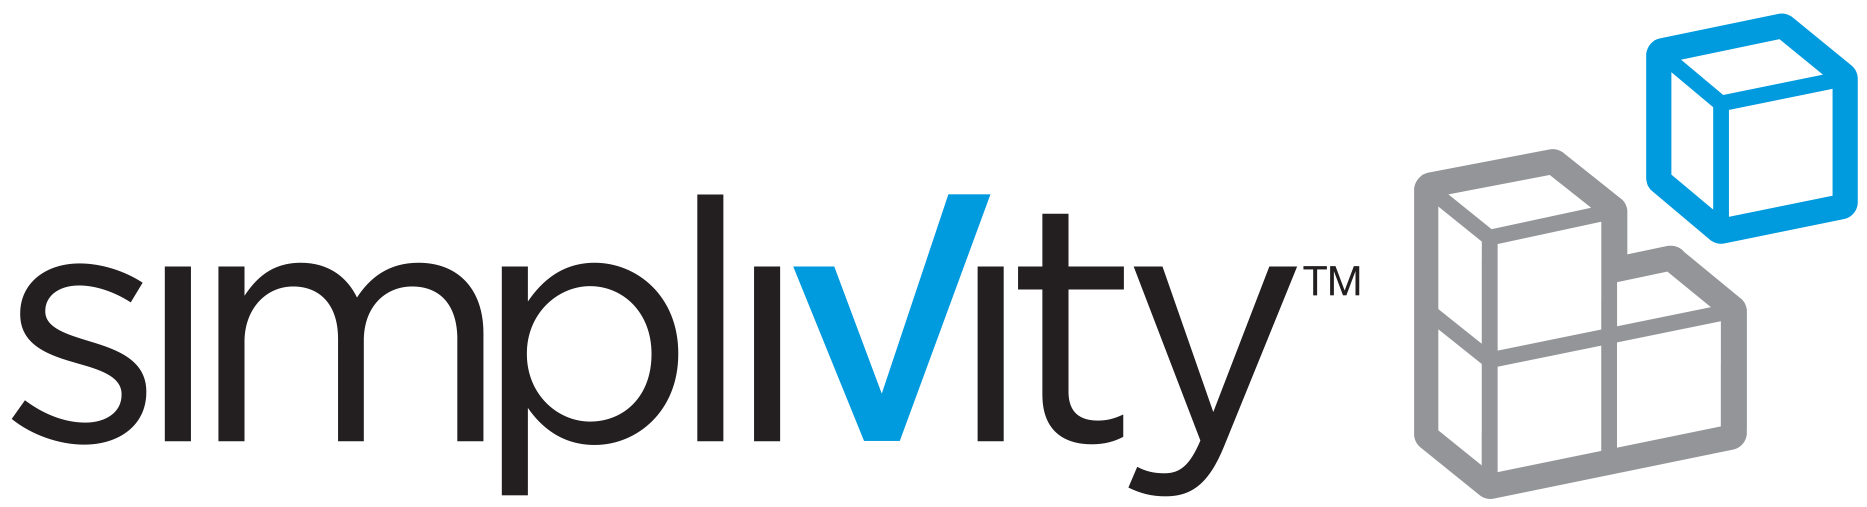 simplivity-logo.png